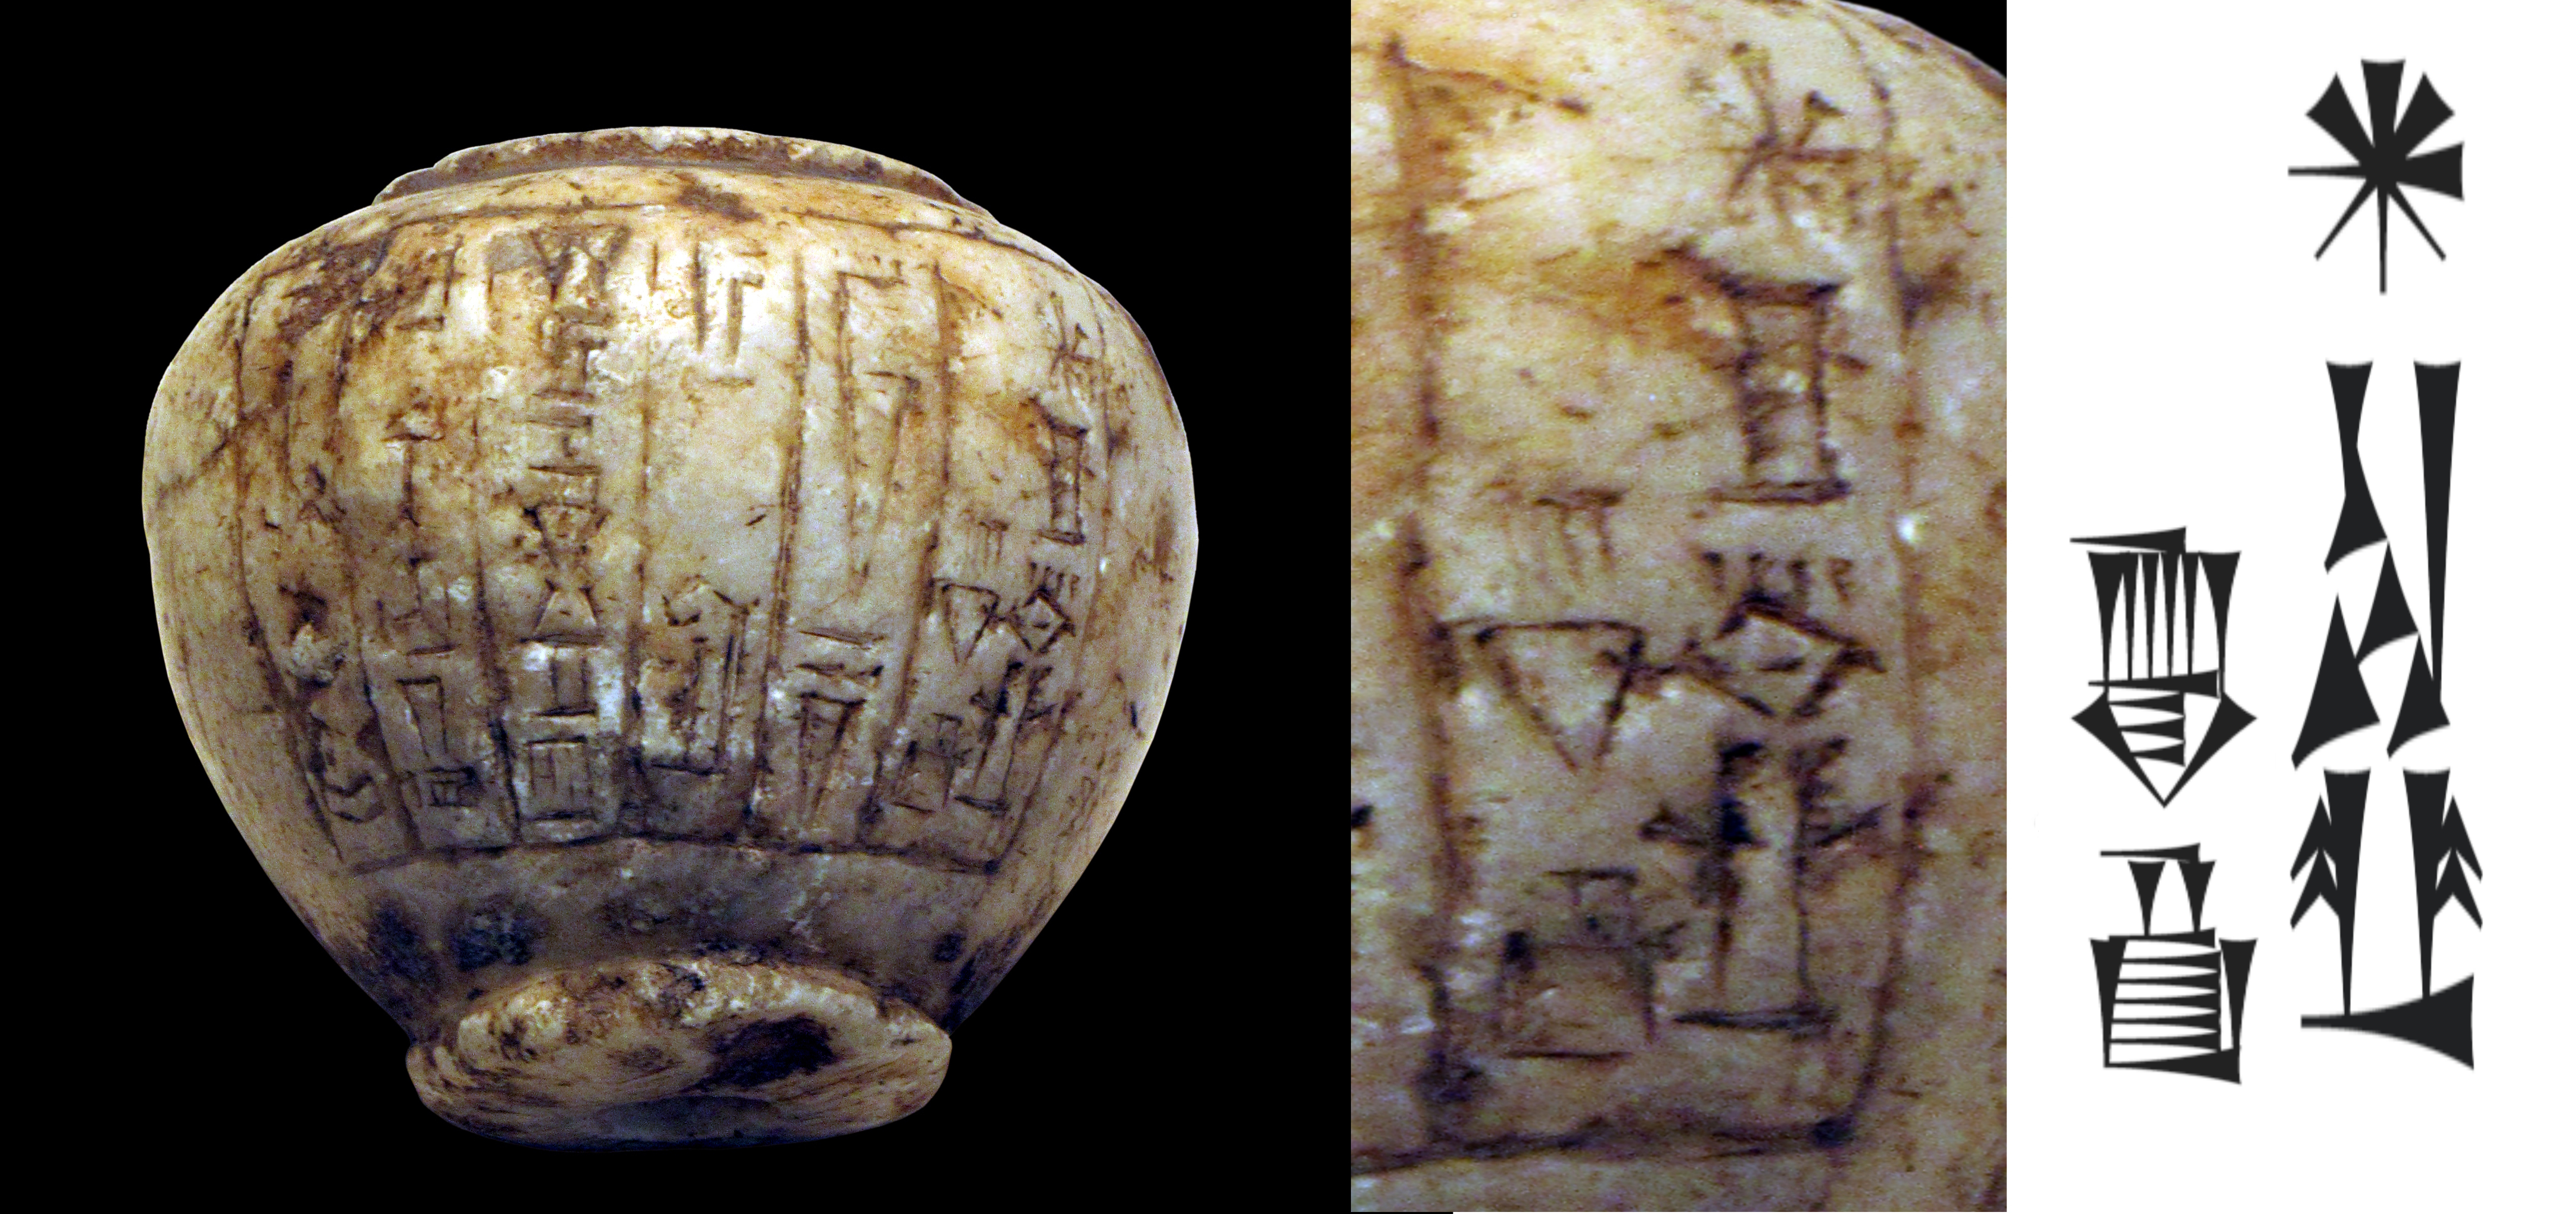 Cc-by-sa-3.0-fr, CC BY-SA 2.0 FR https://creativecommons.org/licenses/by-sa/2.0/fr/deed.en, via Wikimedia Commons (图为卢浮宫收藏的刻有Gilgamesh楔形名字的锤头，时间在公元前2112到2004之间)